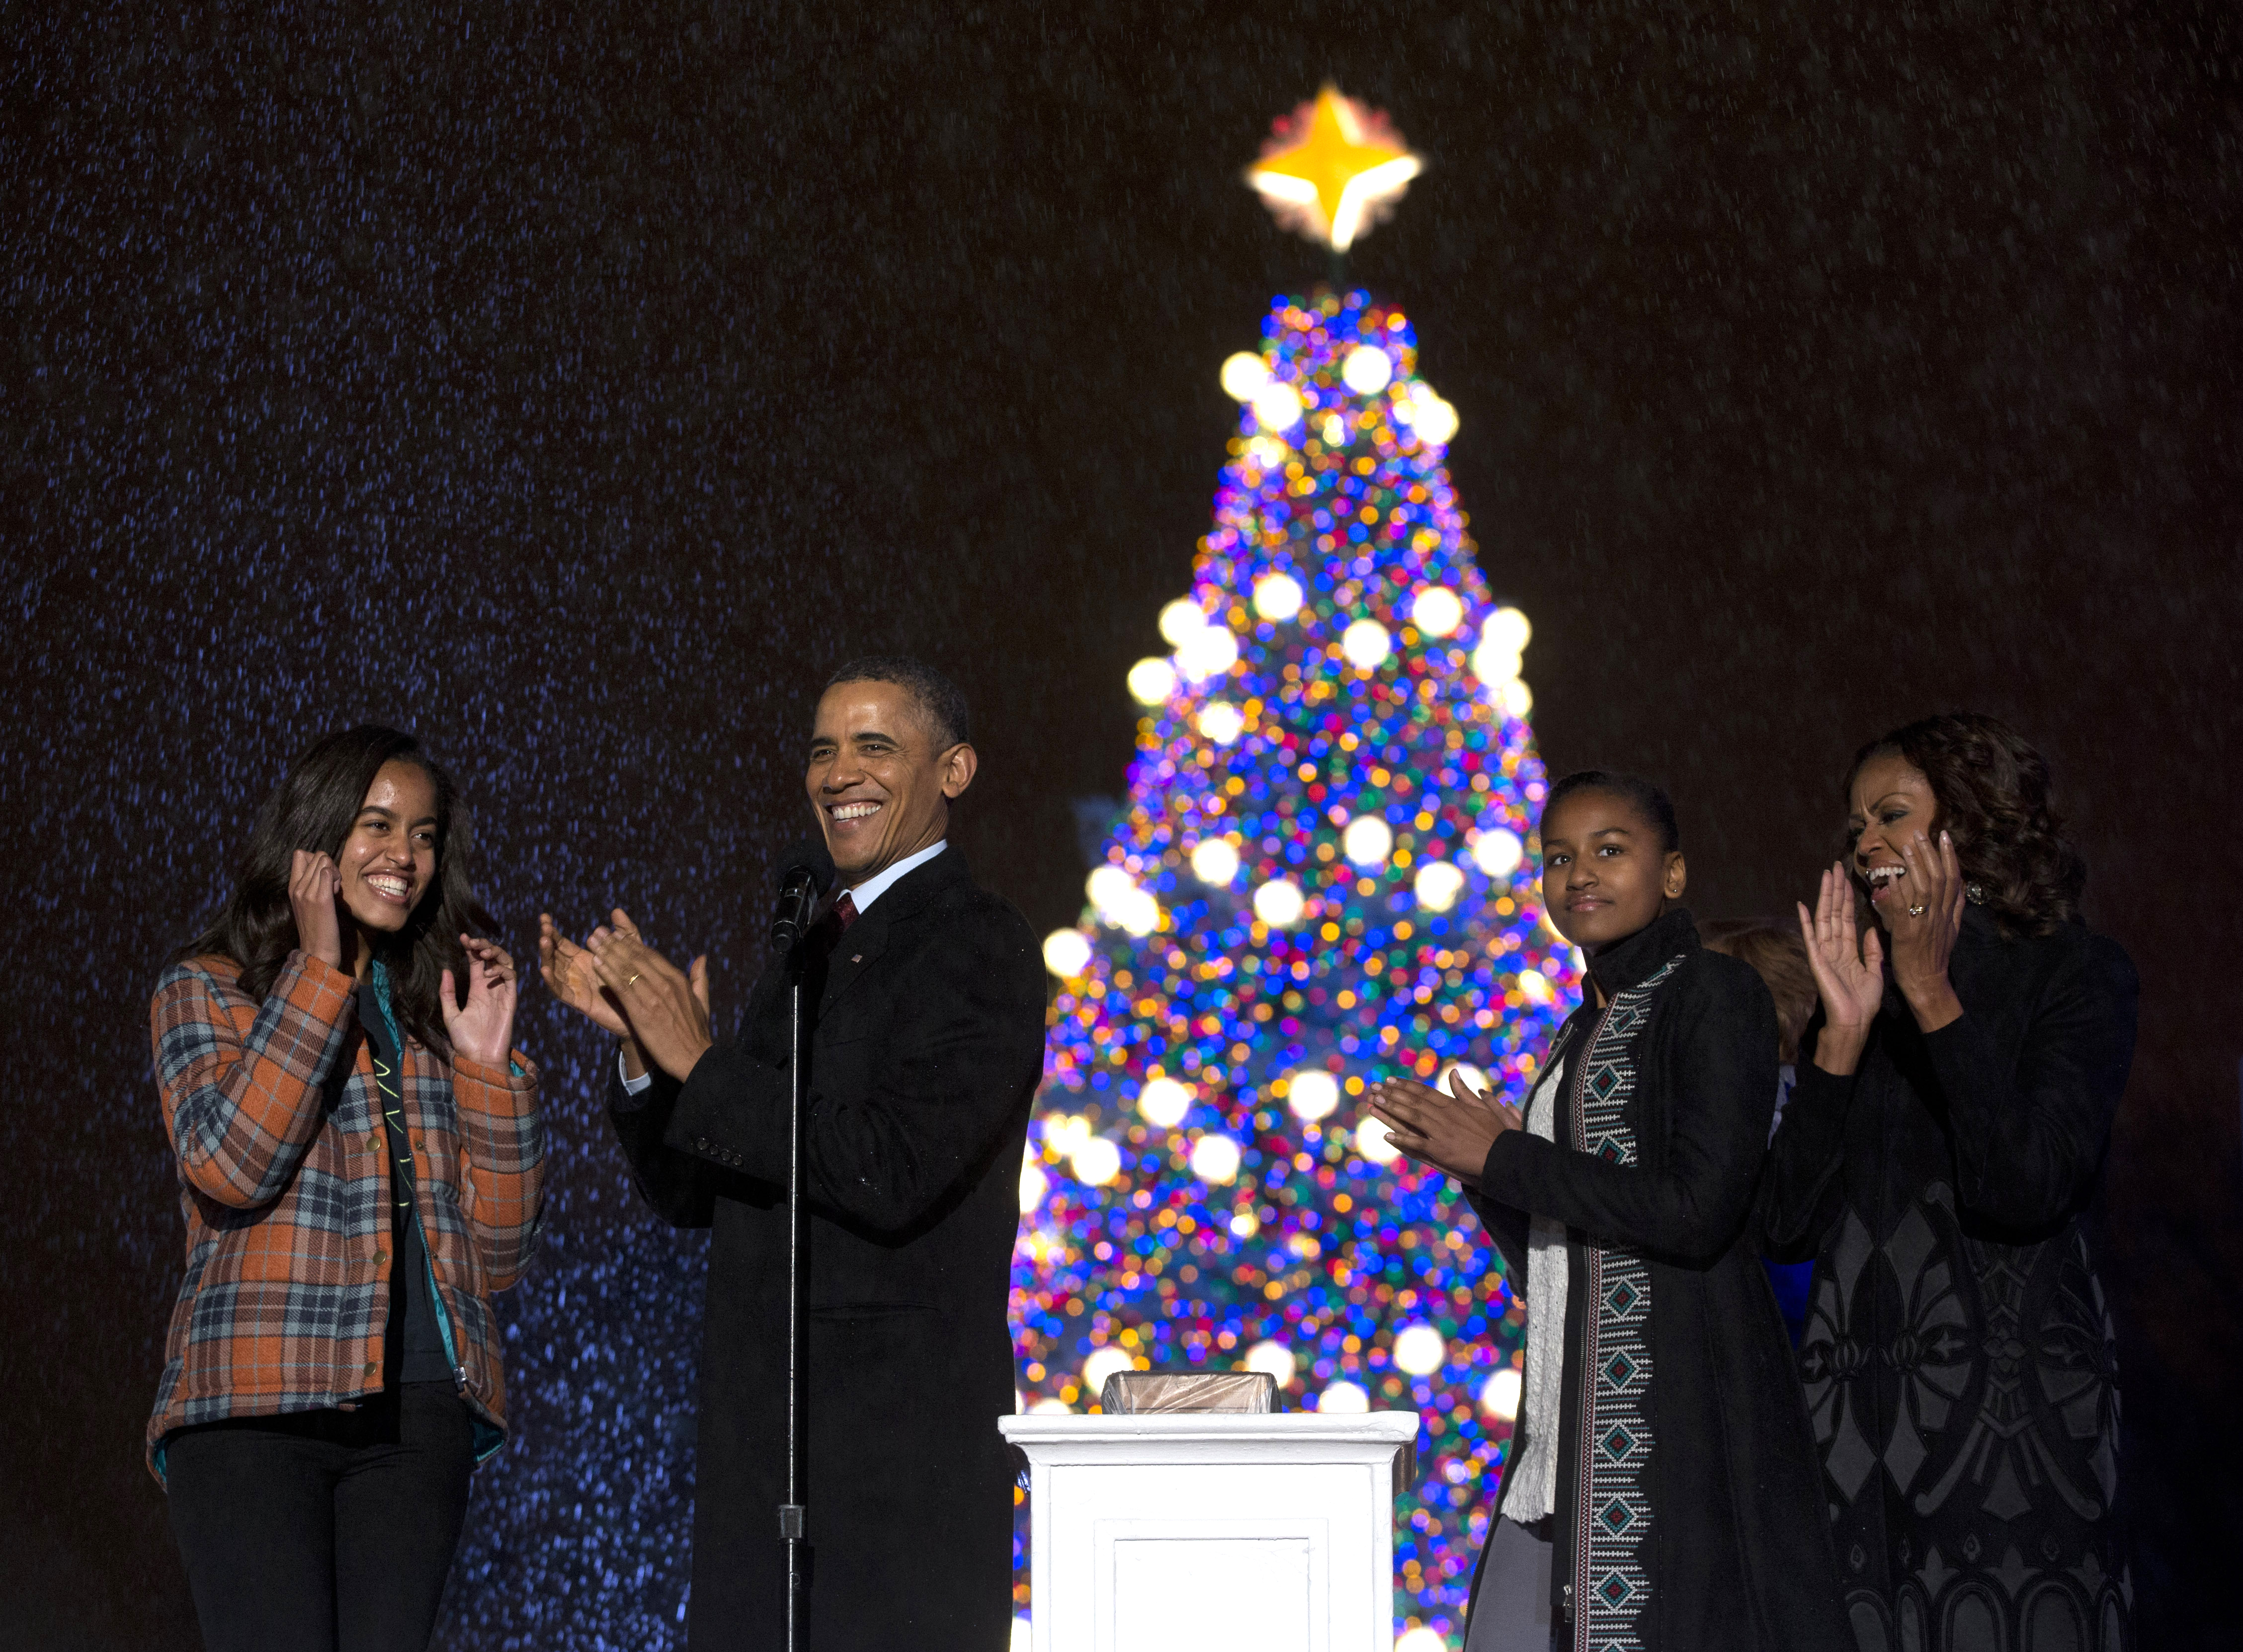 White House to stream National Christmas Tree Lighting online